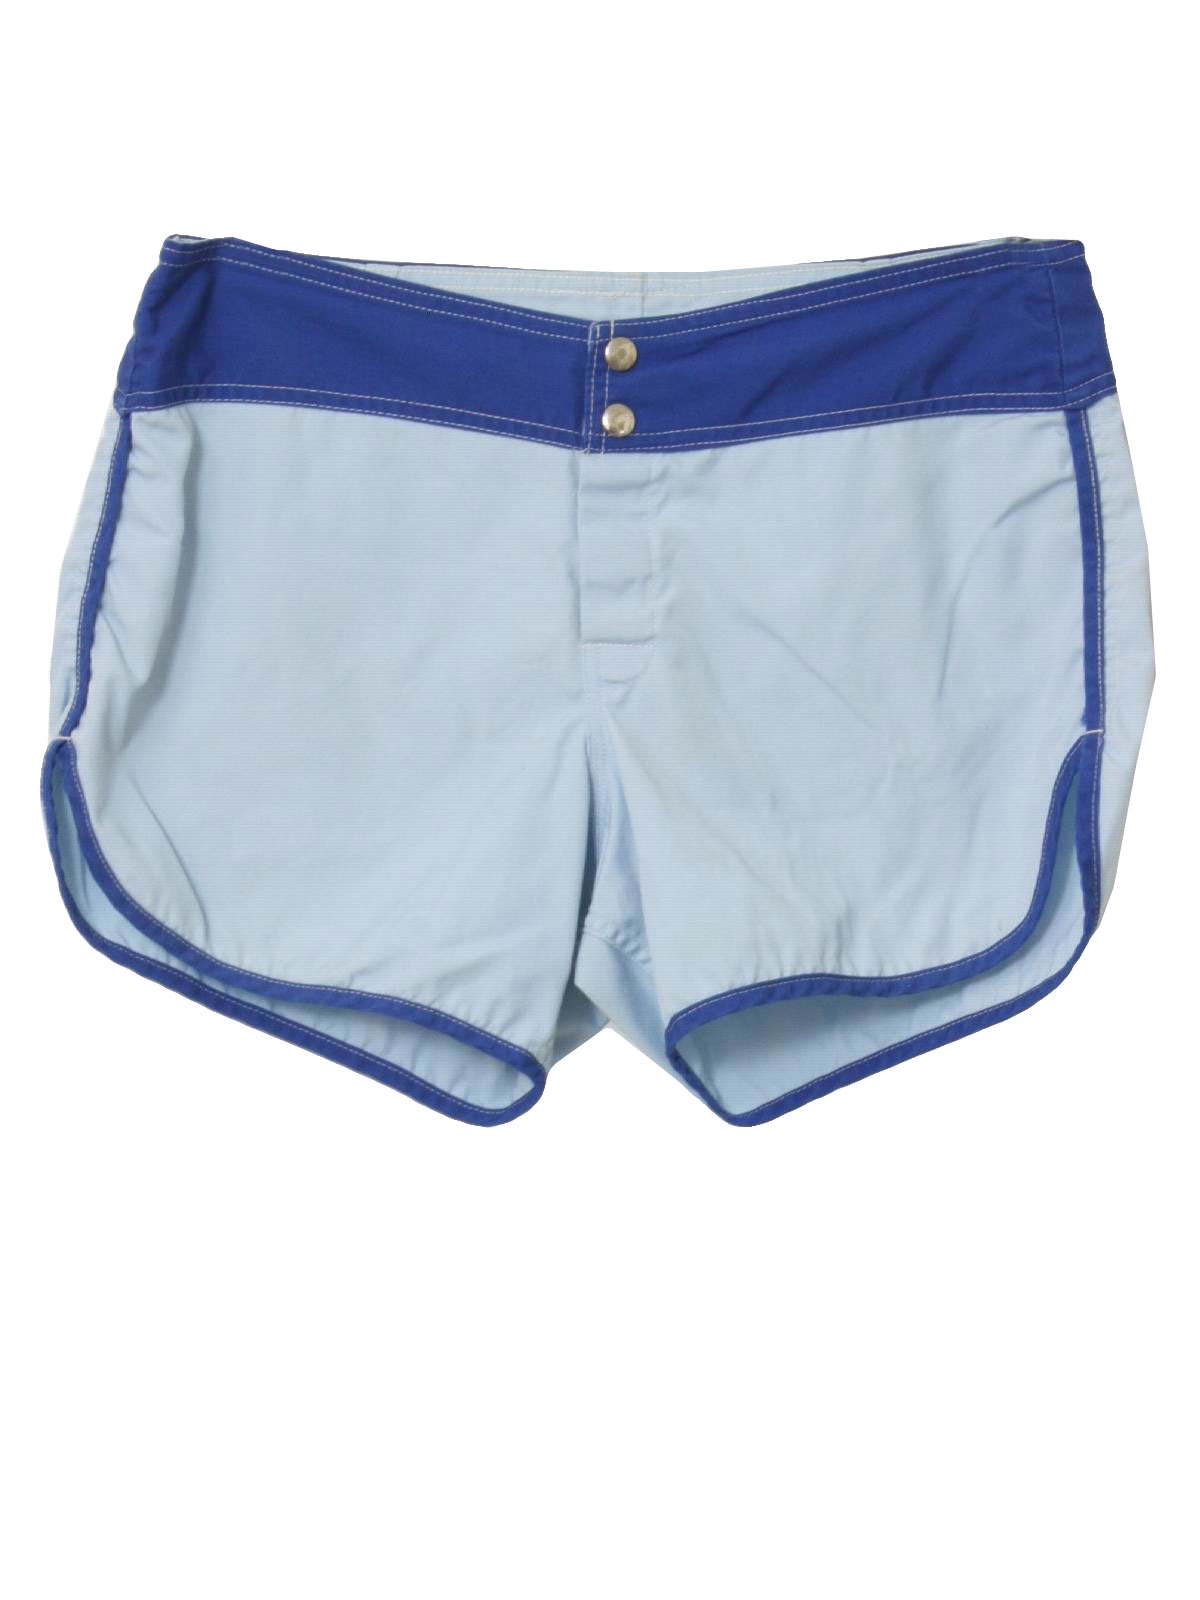 Sun Britches 80's Vintage Shorts: 80s -Sun Britches- Mens blue on blue ...